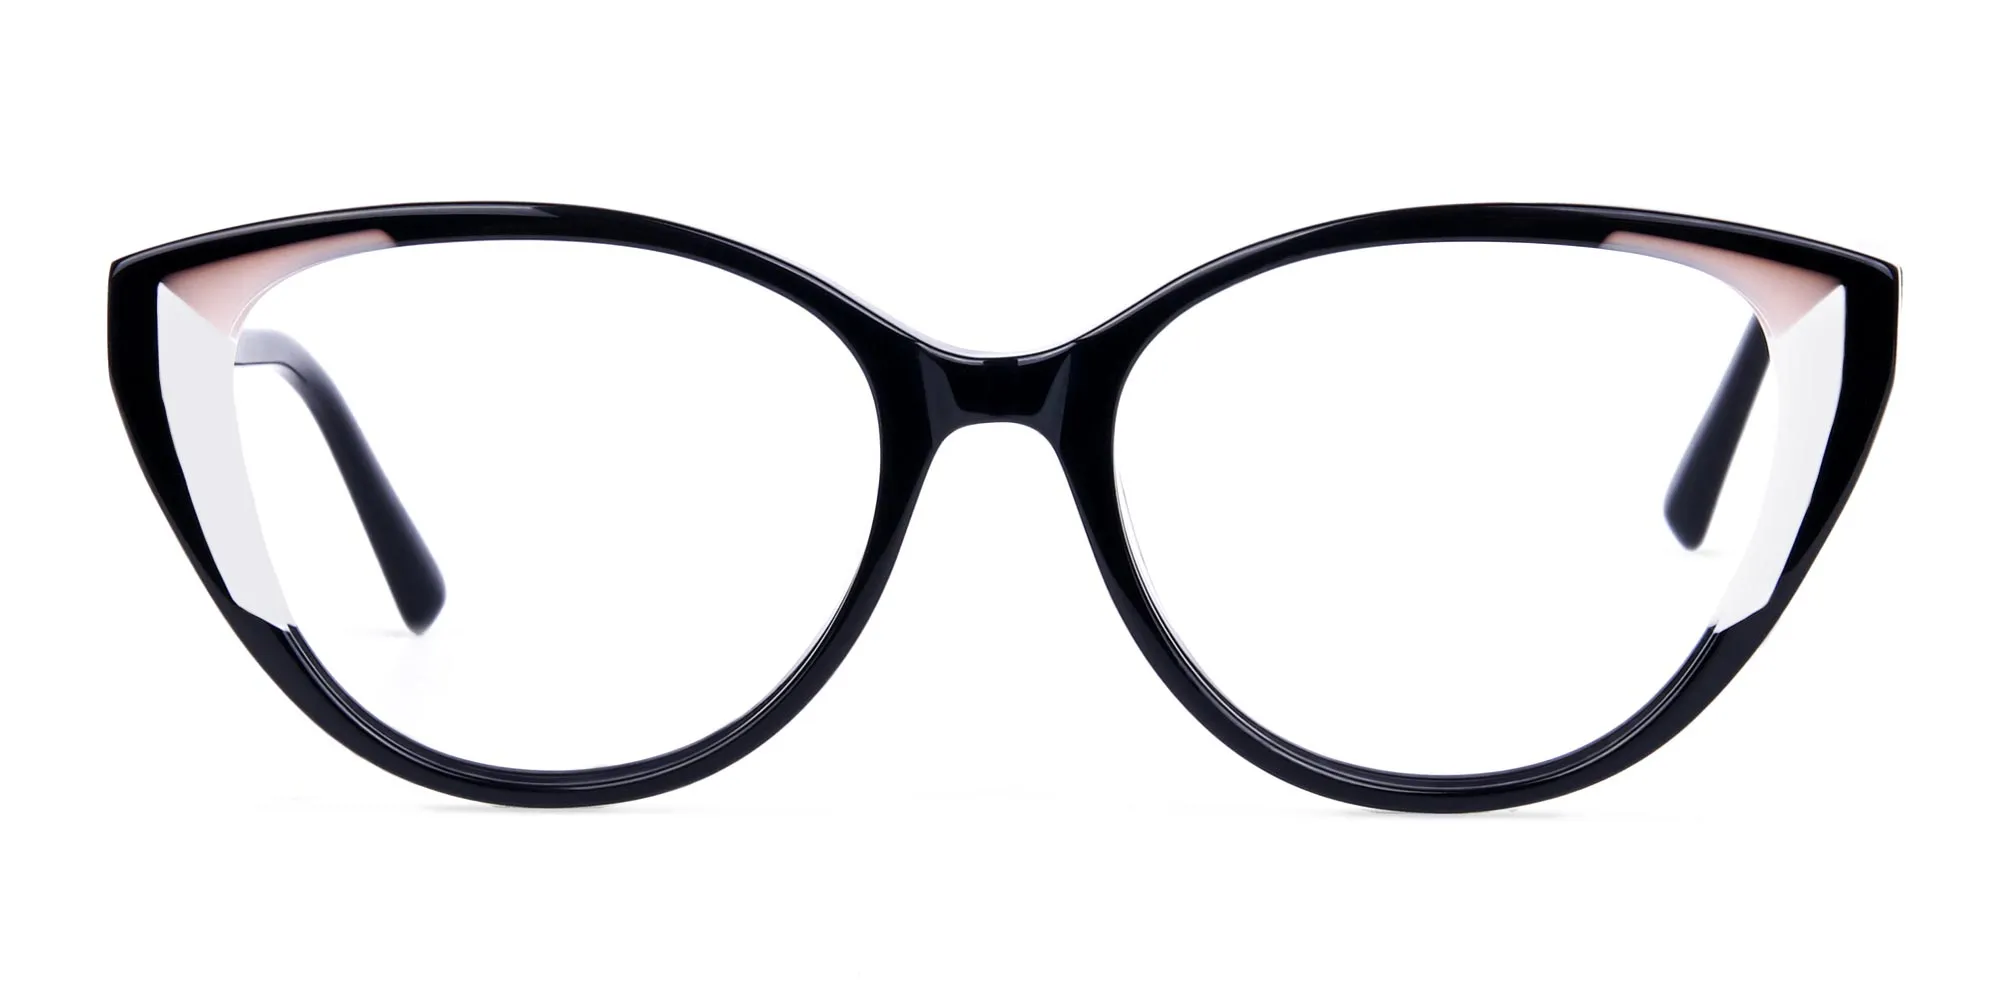 Black and Translucent Cat Eye Glasses Frame-2